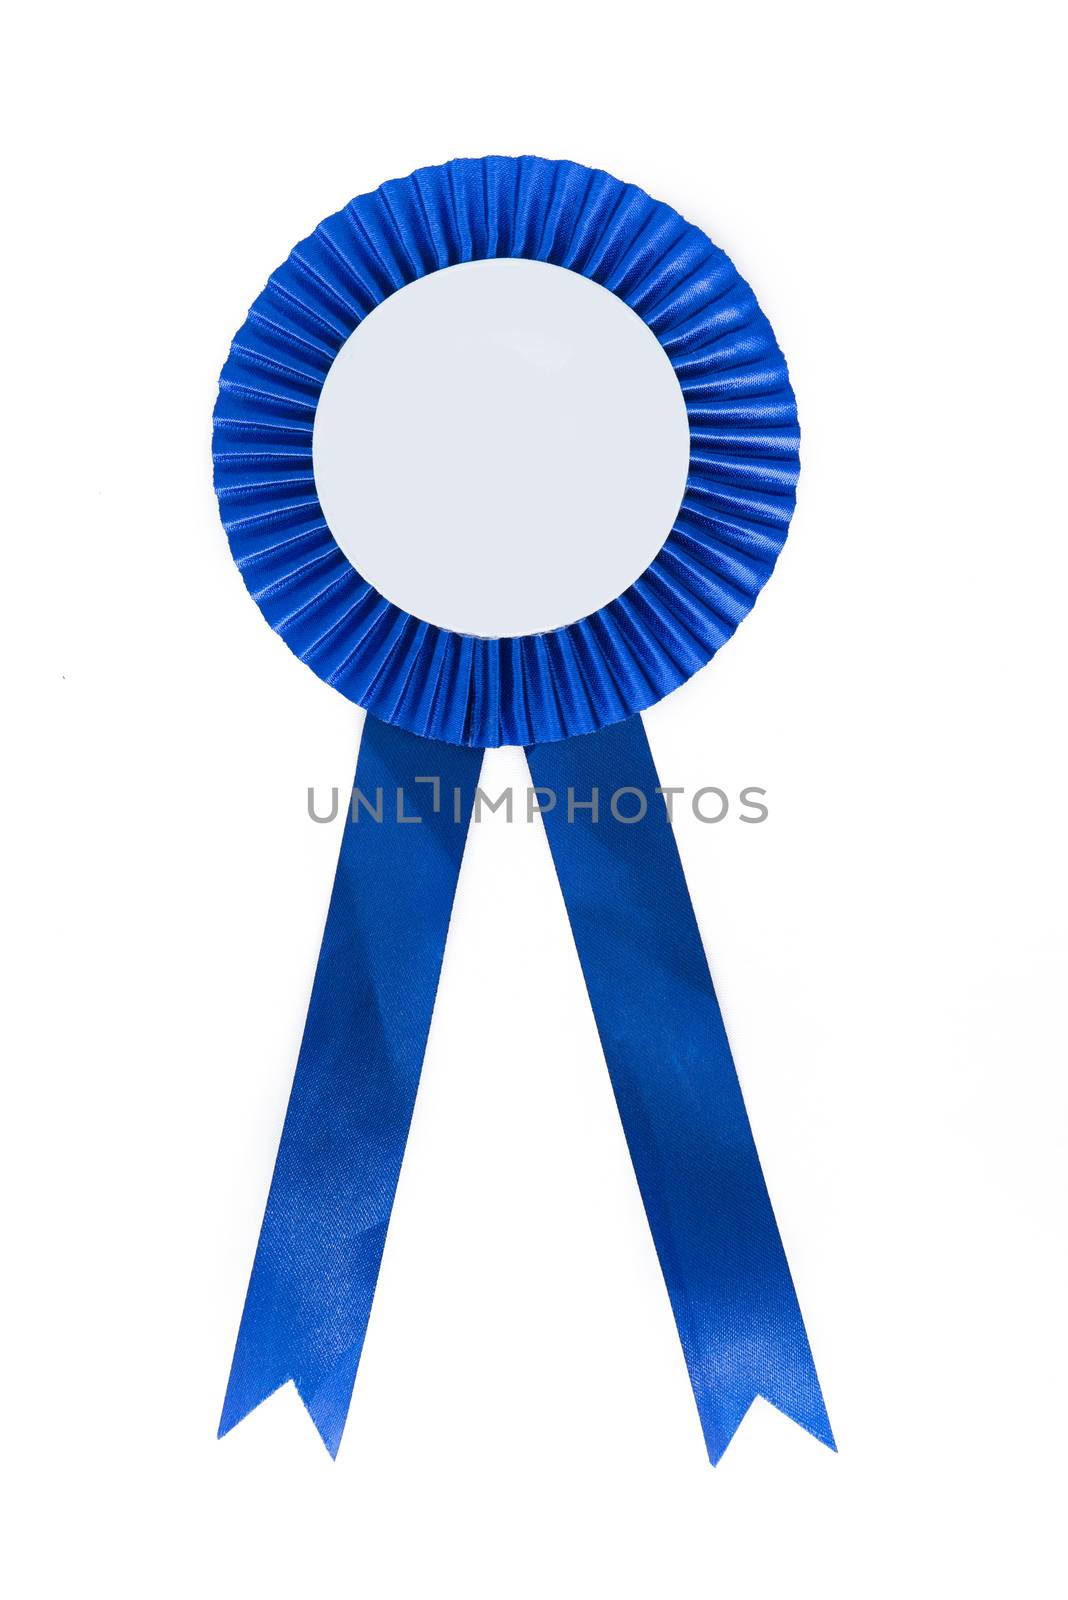 blue fabric award ribbon by antpkr